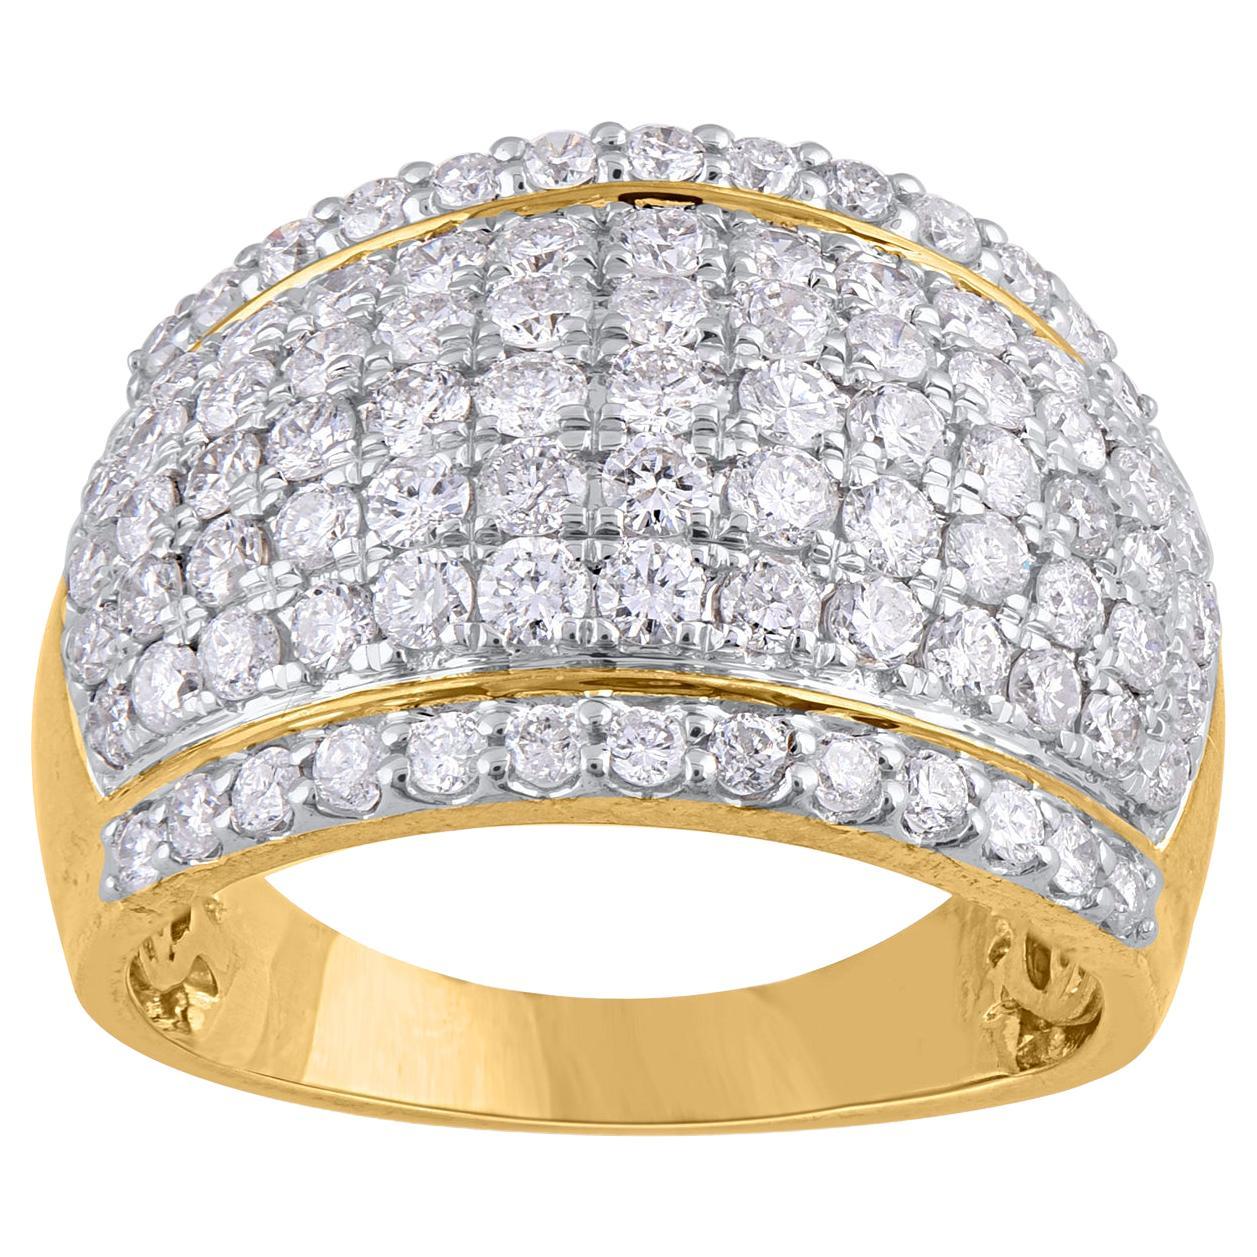 TJD 2.0 Carat Brilliant Cut Diamond Anniversary Band Ring in 14KT Yellow Gold